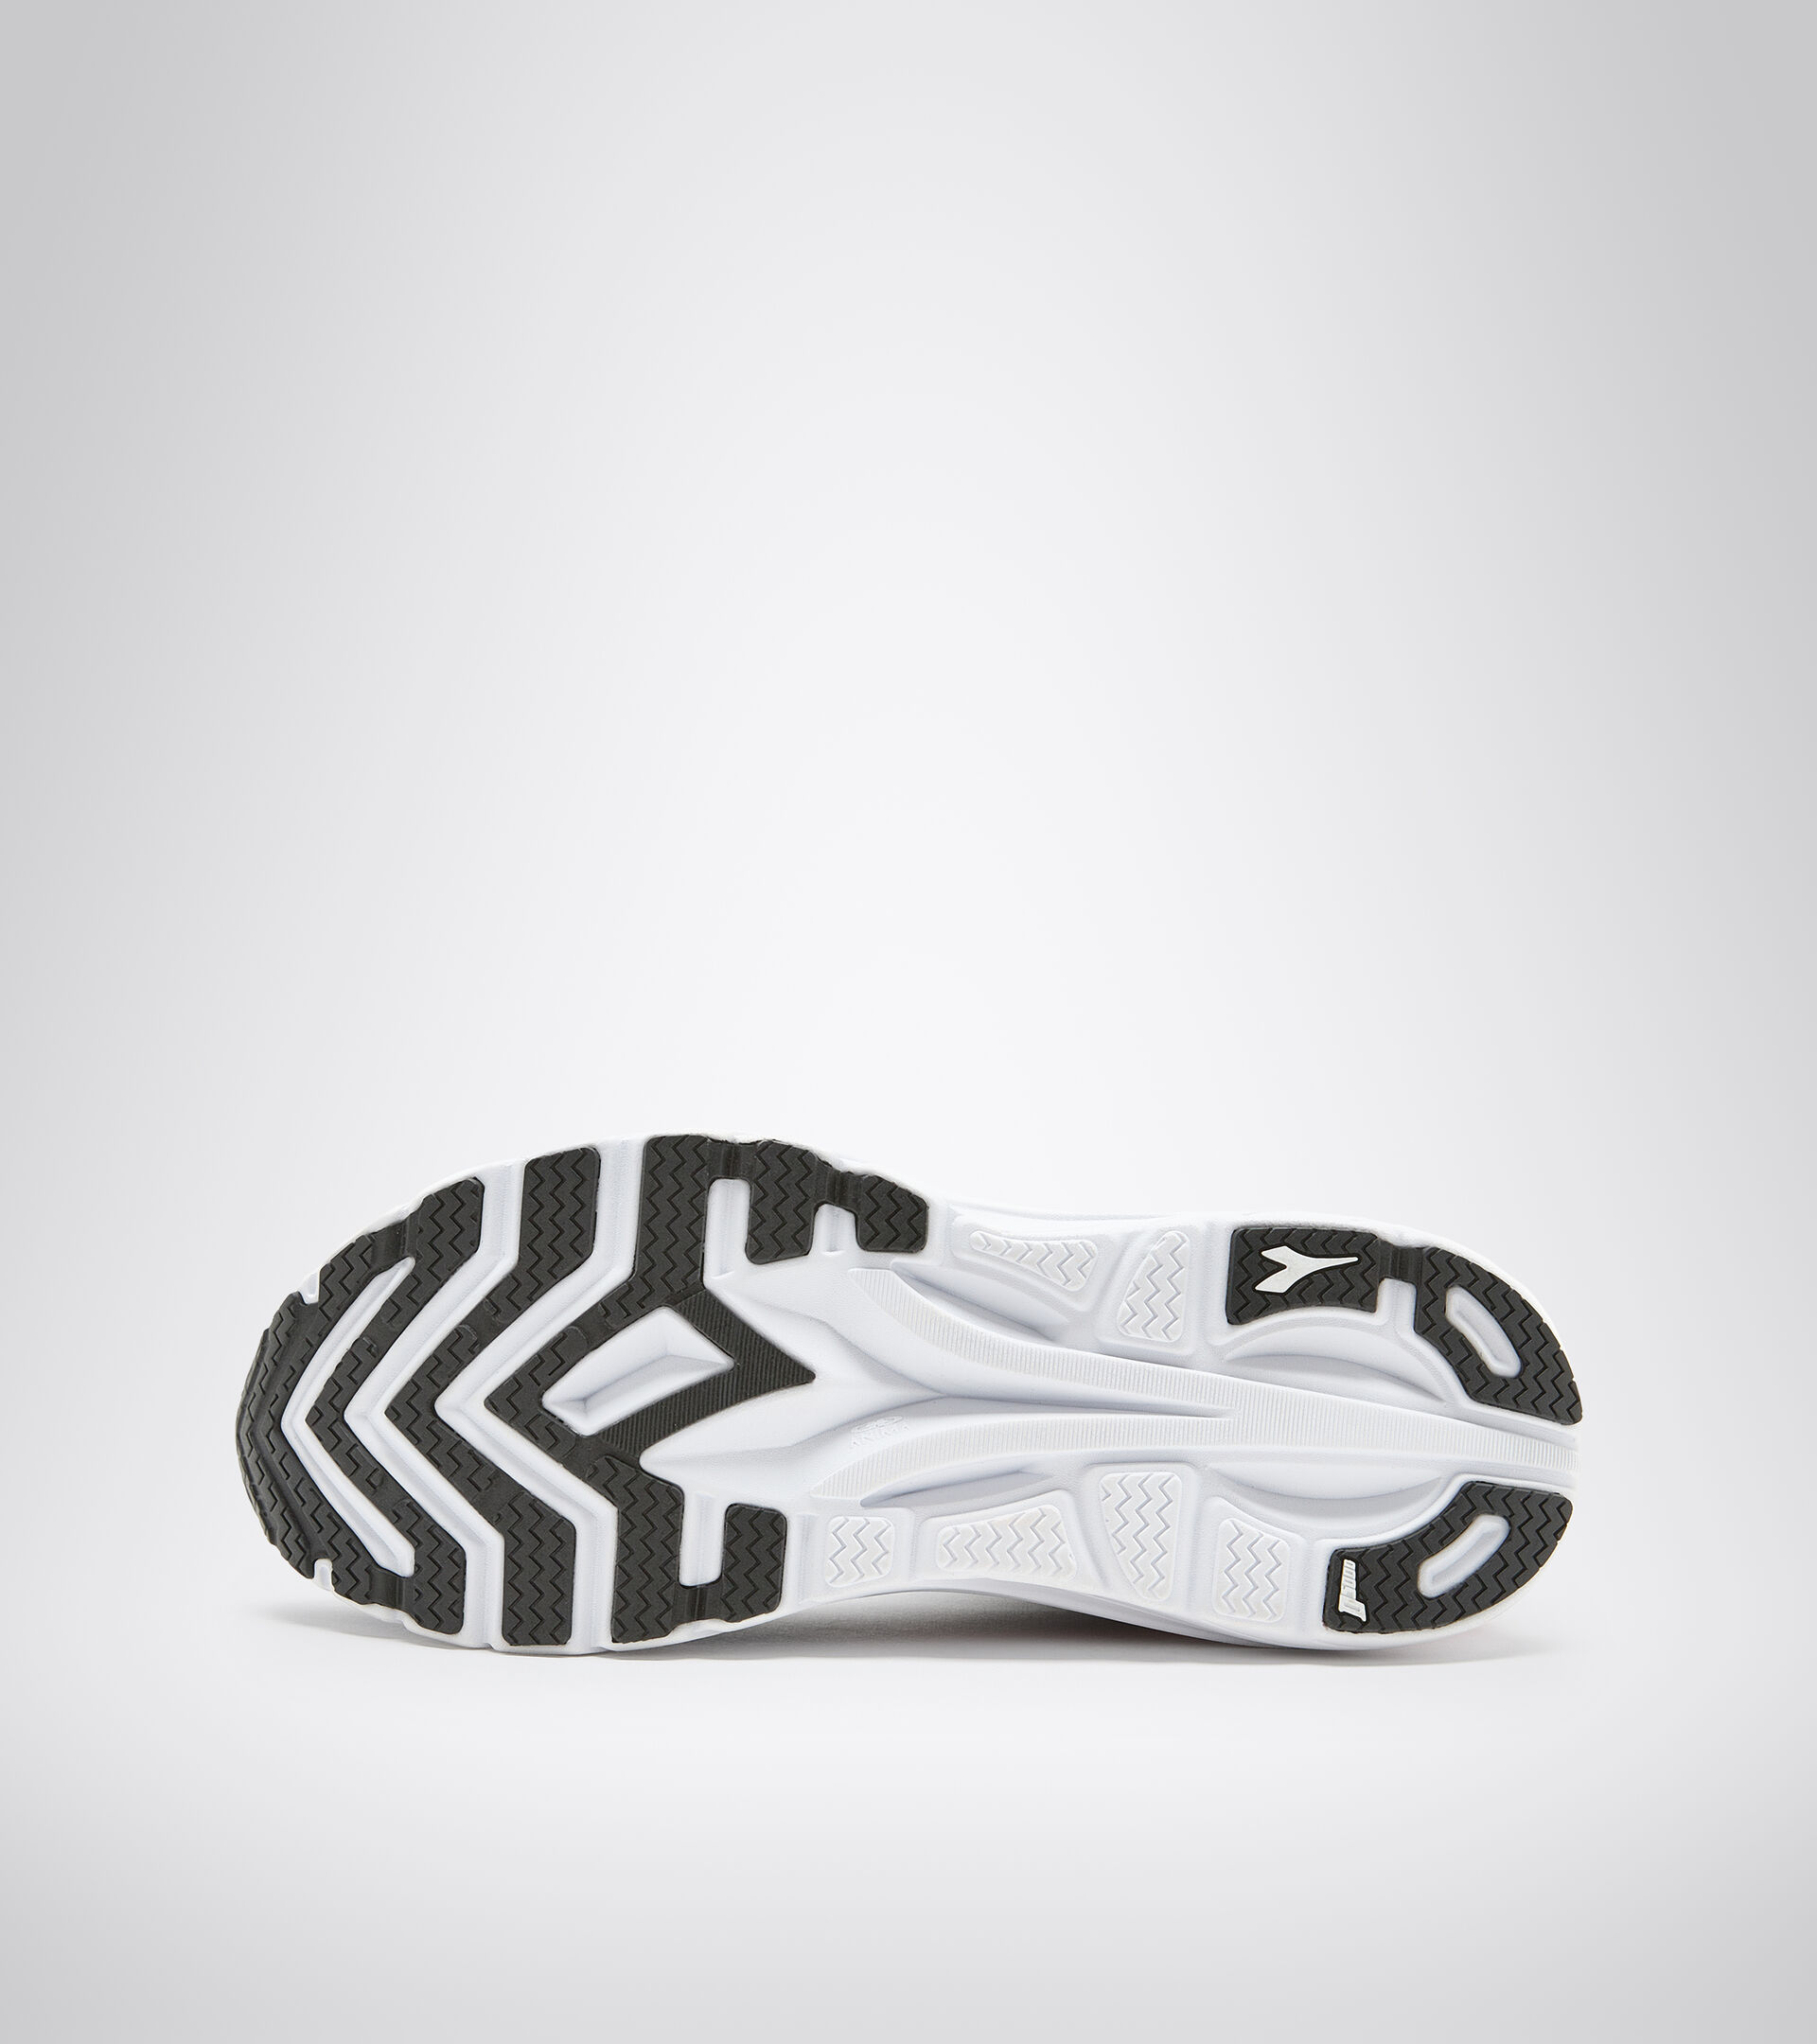 Chaussures de running Made in Italy - Homme EQUIPE ATOMO GRIS ACIER/BLANC - Diadora